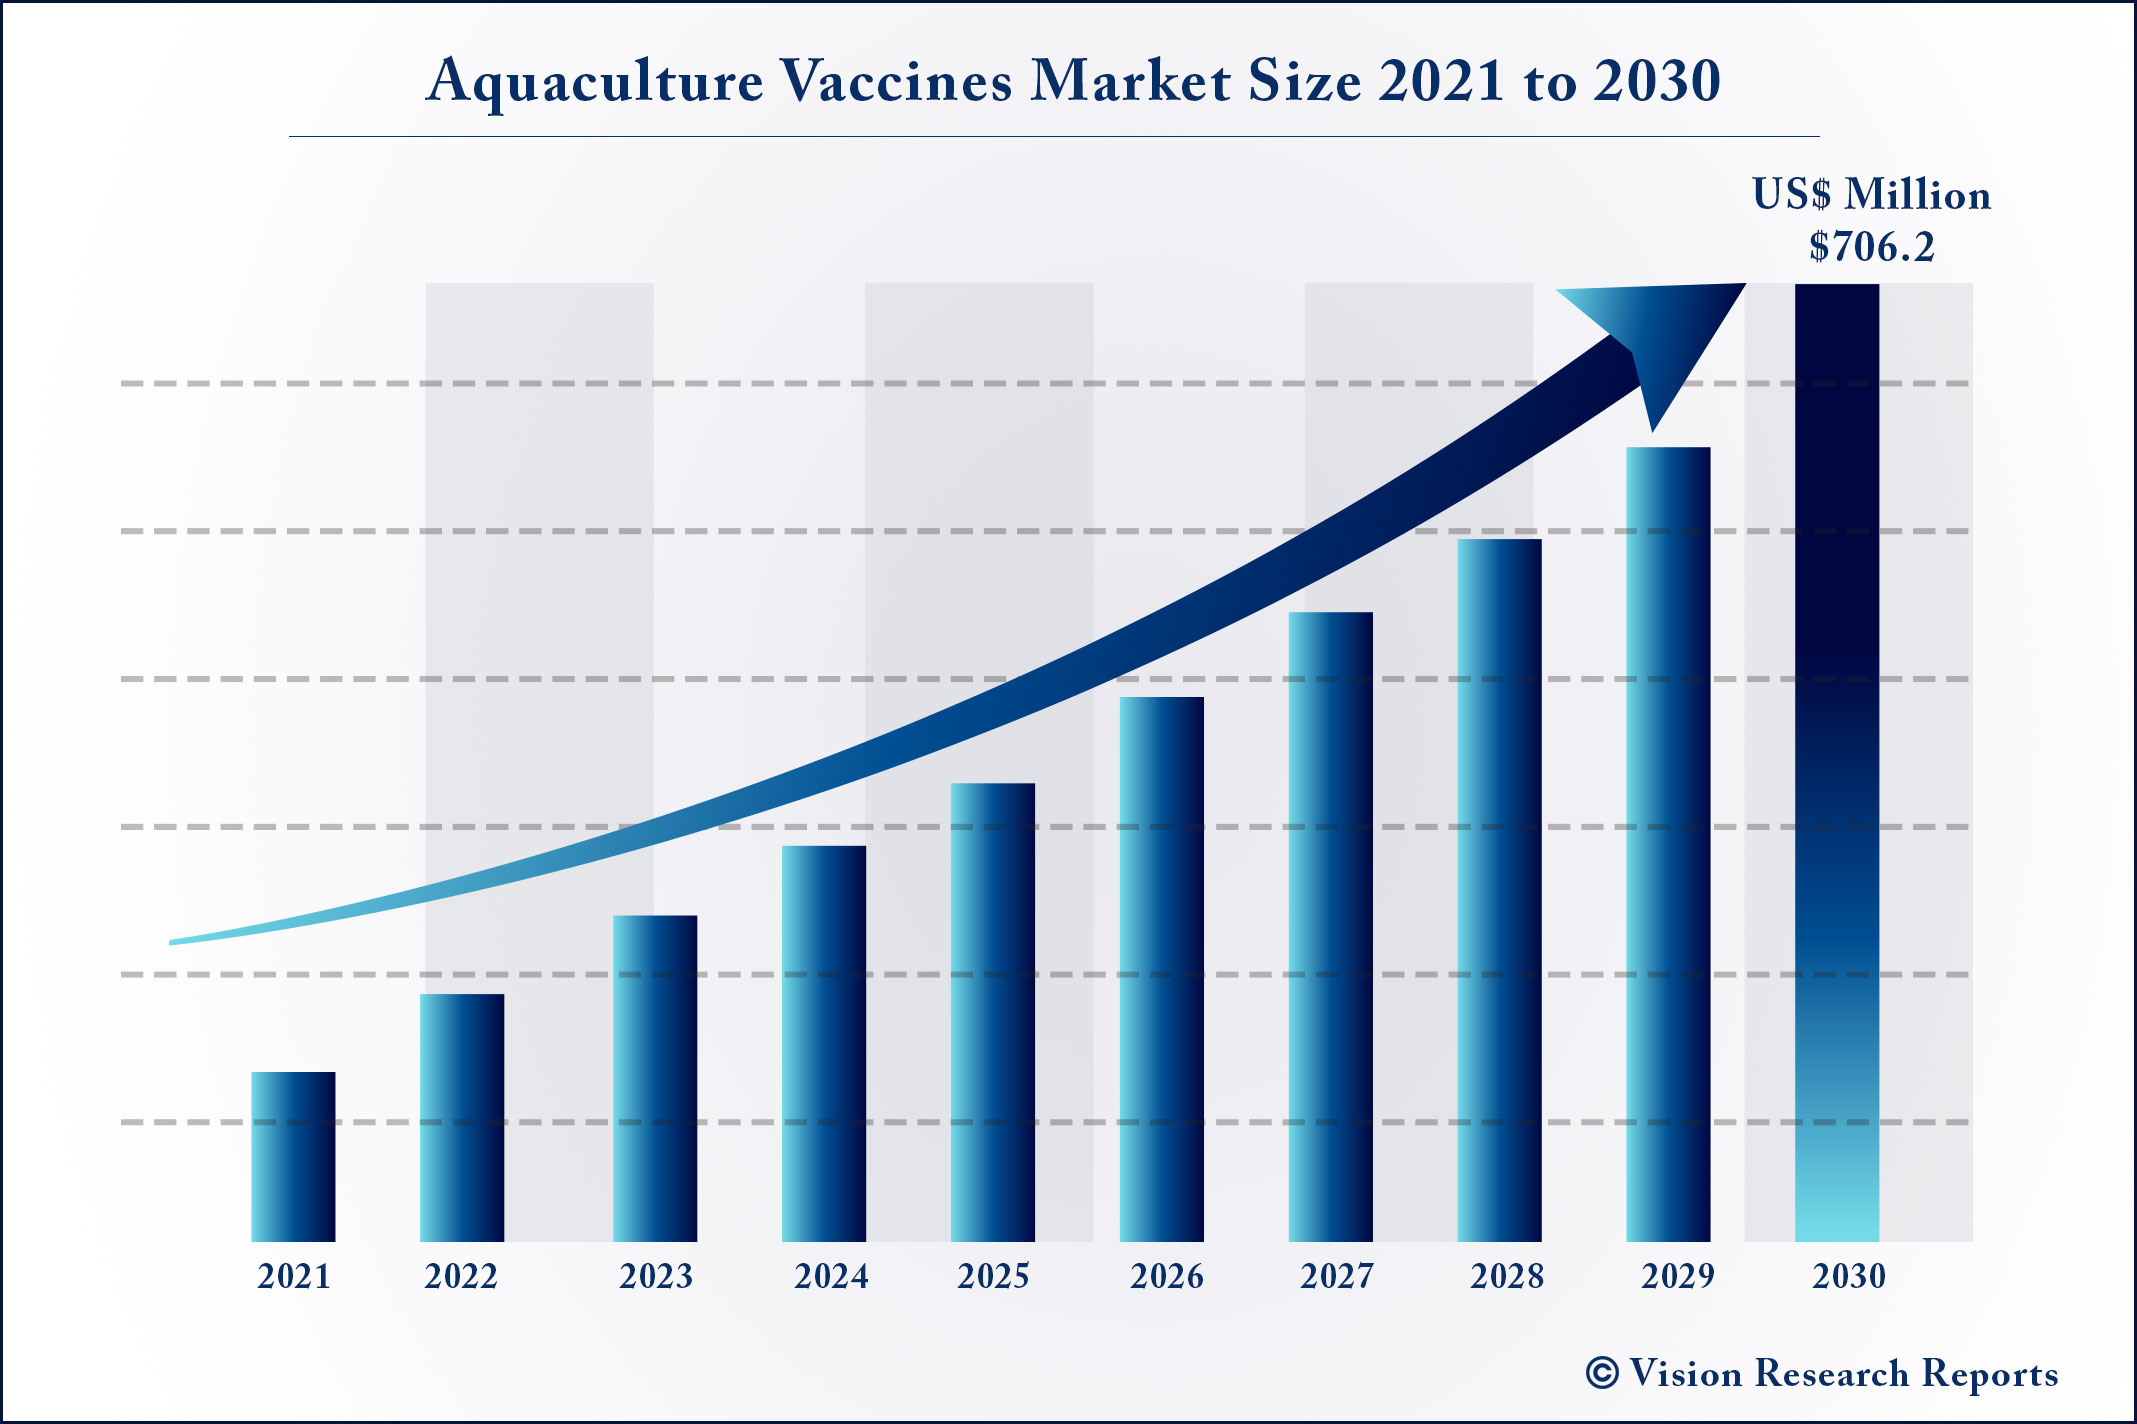 Aquaculture Vaccines Market Size 2021 to 2030